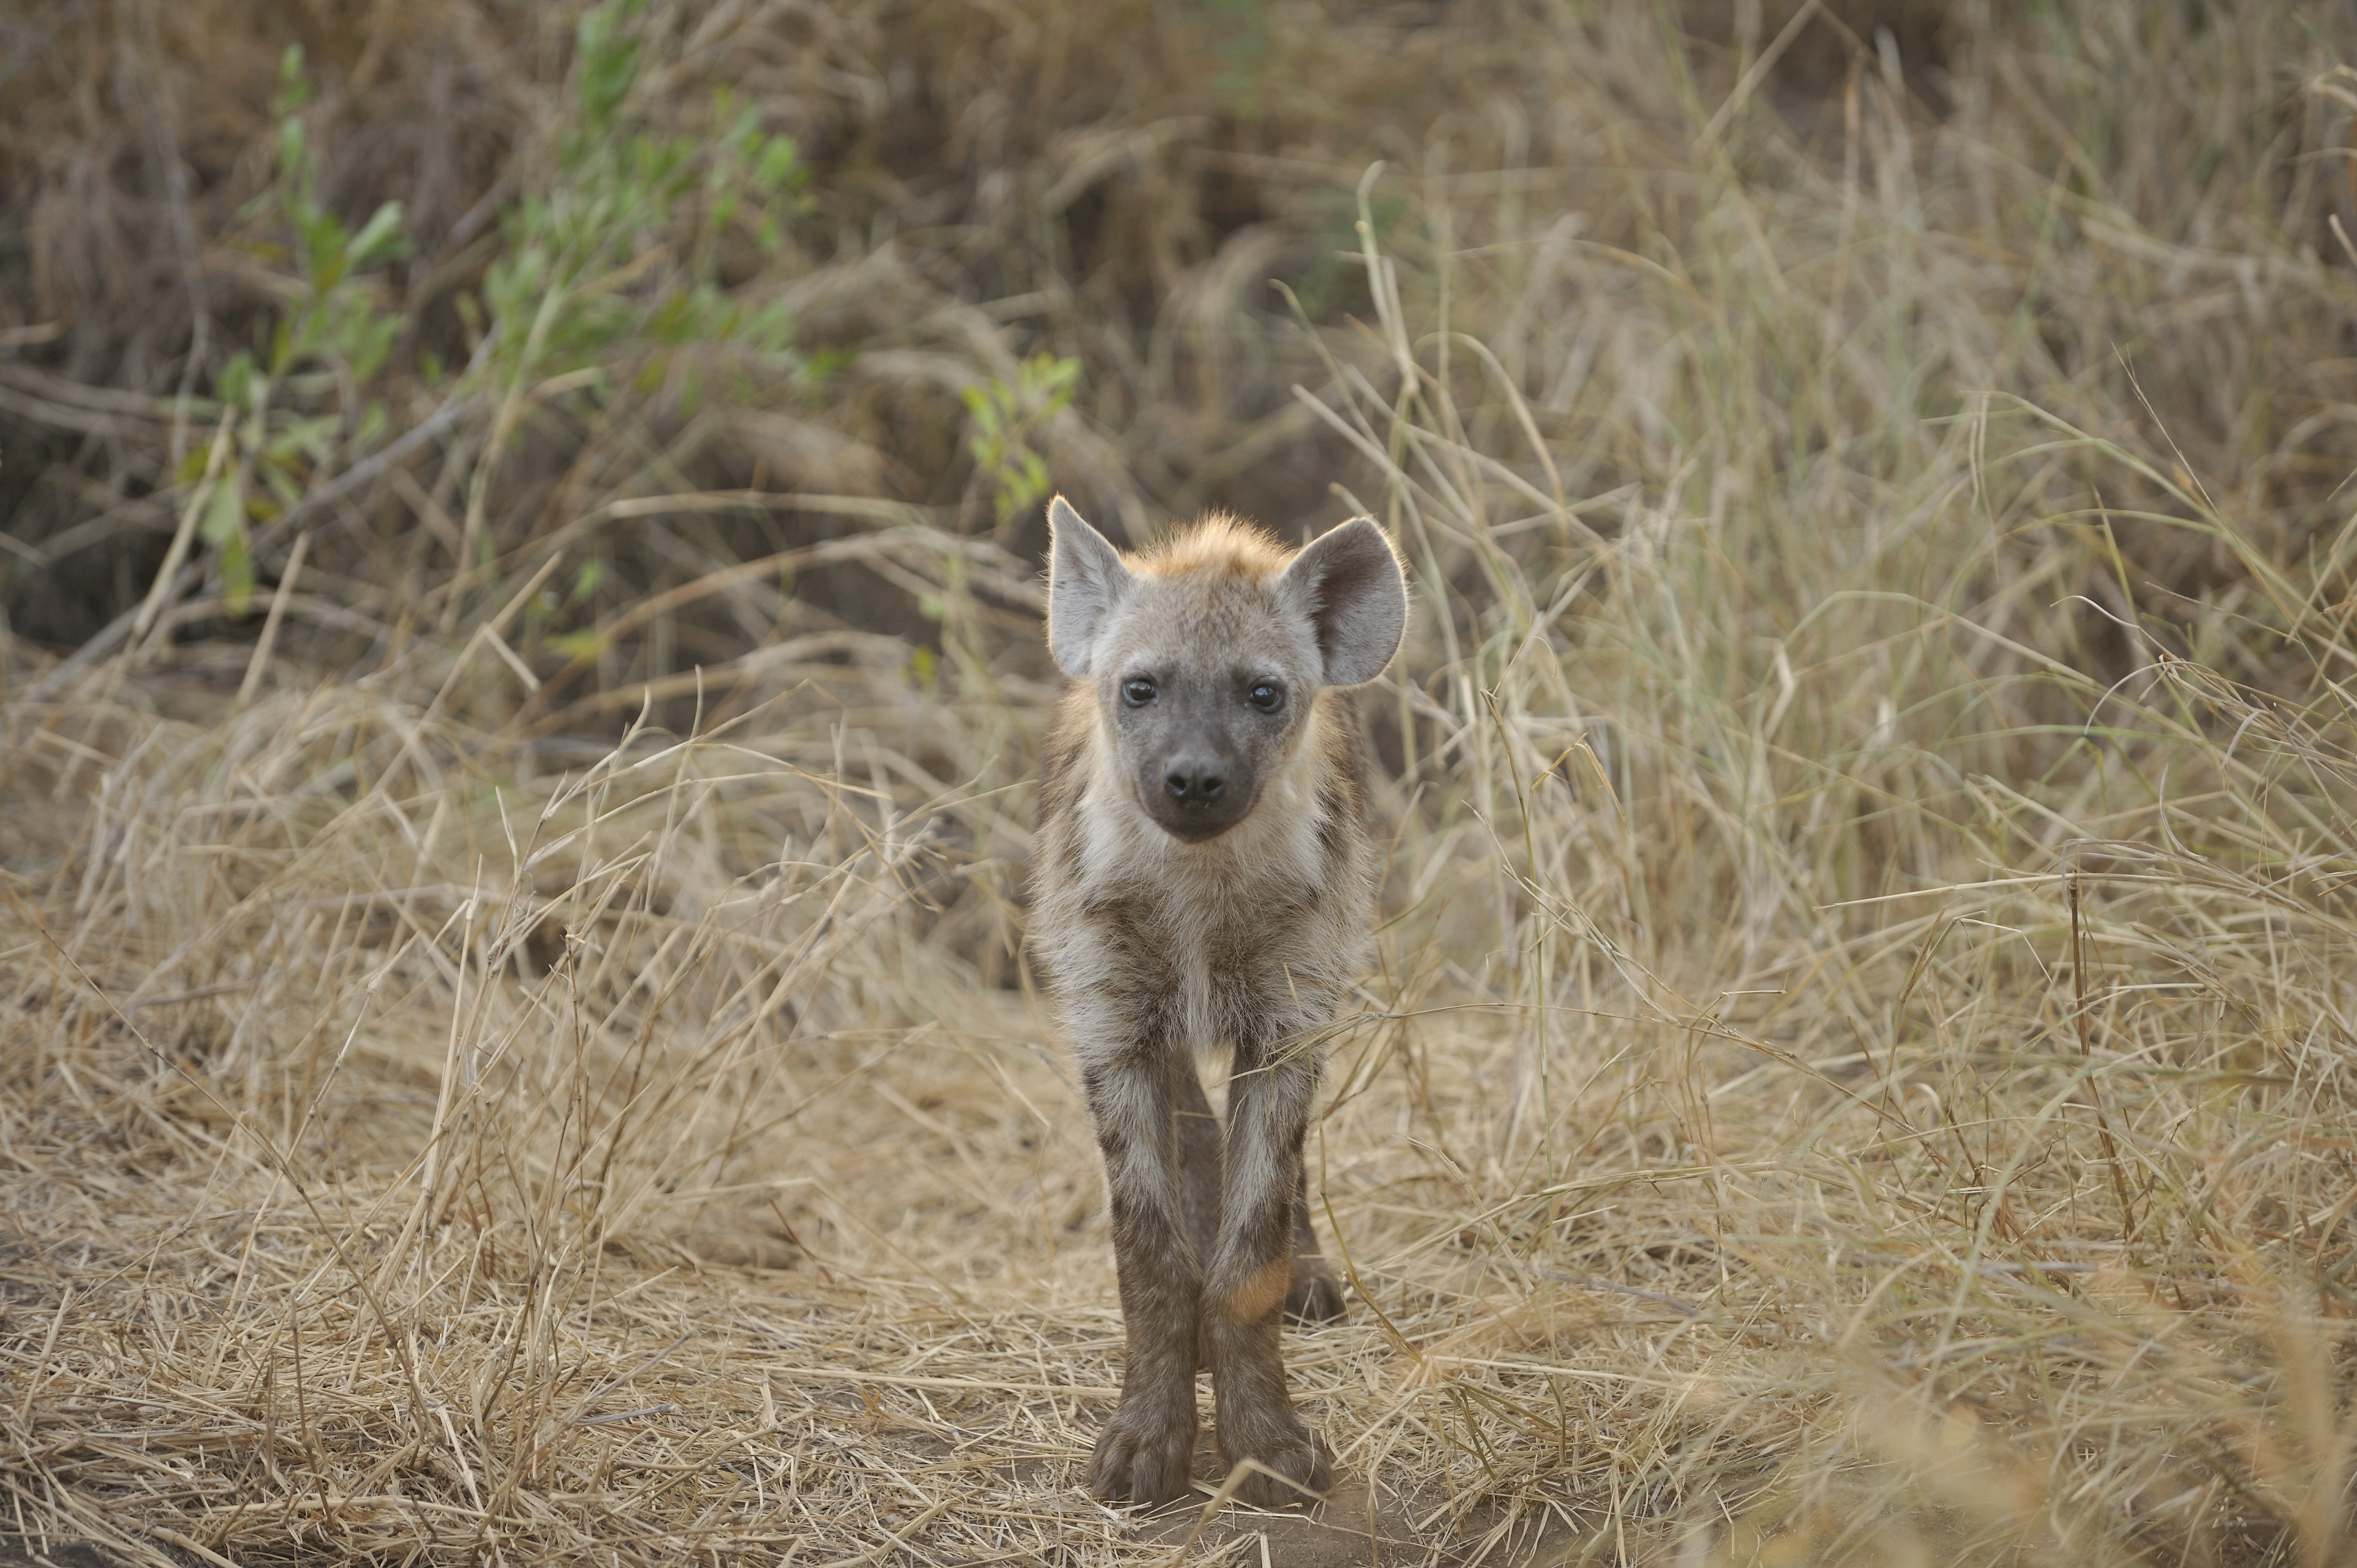 Hyena Pup 1